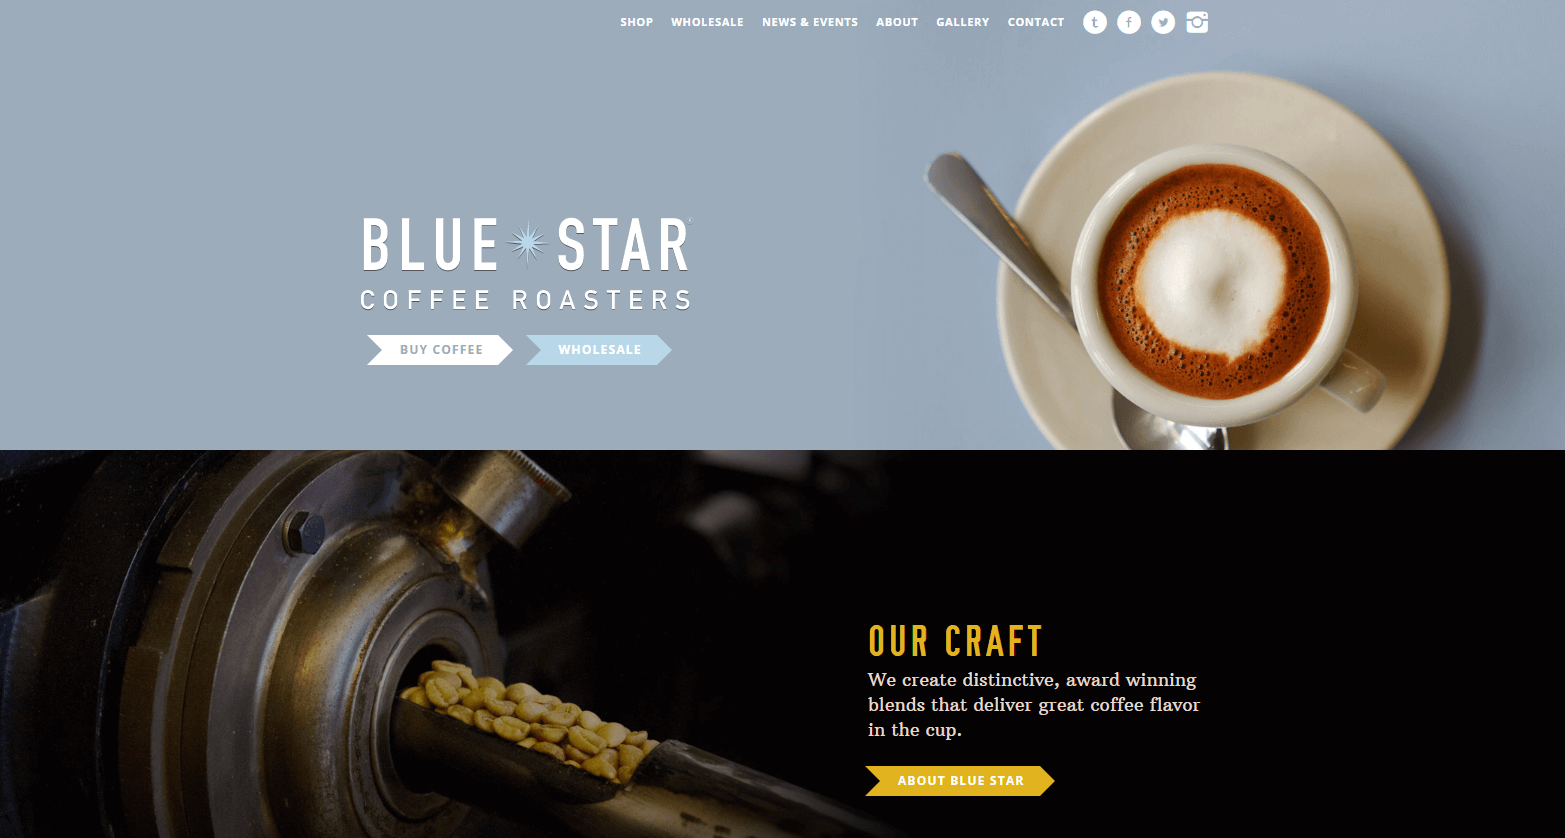 The Blue Star website.